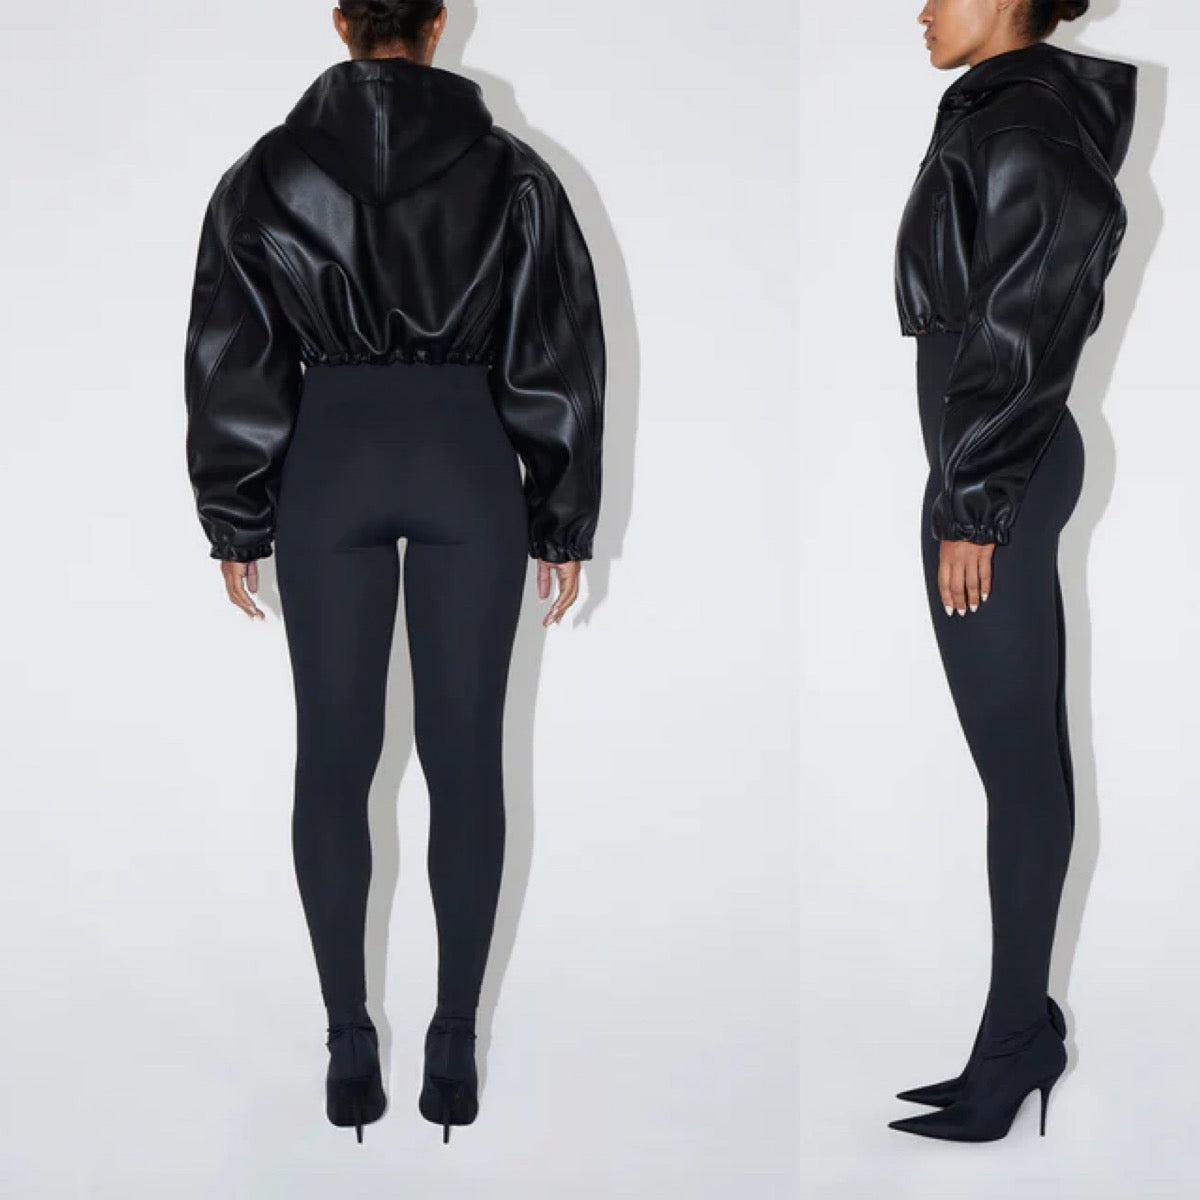 Khy - Faux leather cropped jacket - black